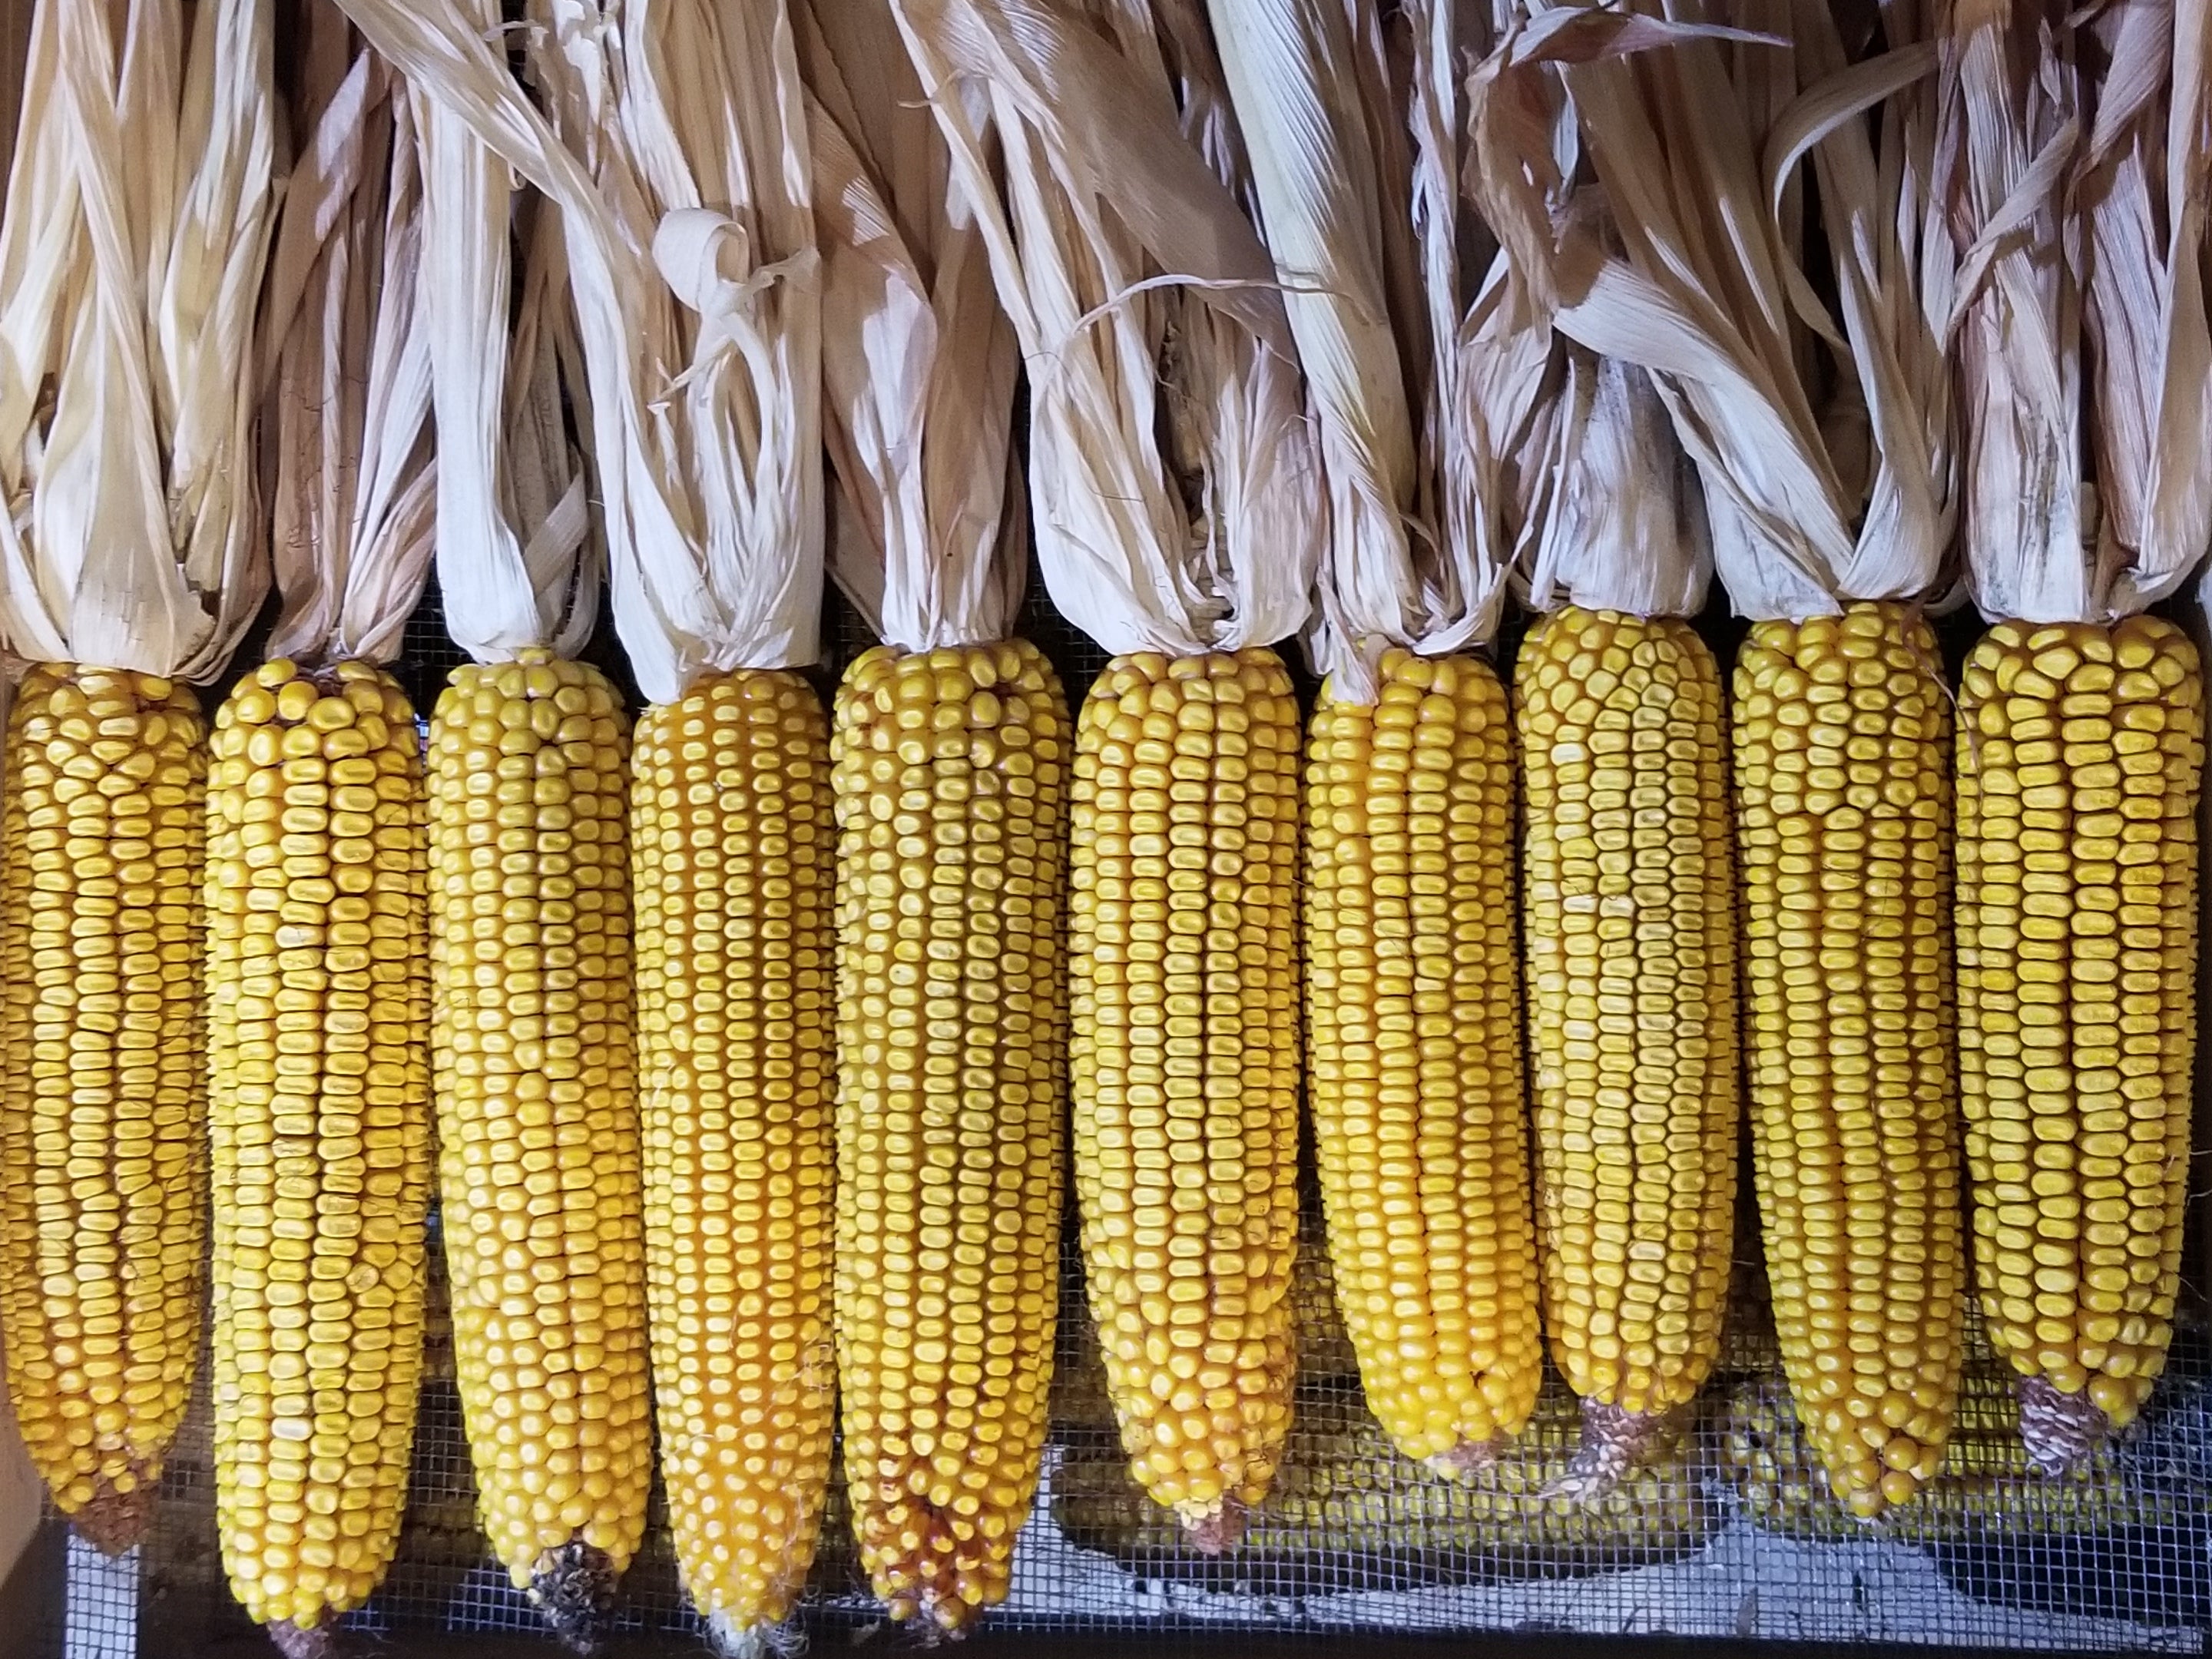 Choice ears of Minnesota 13 Corn